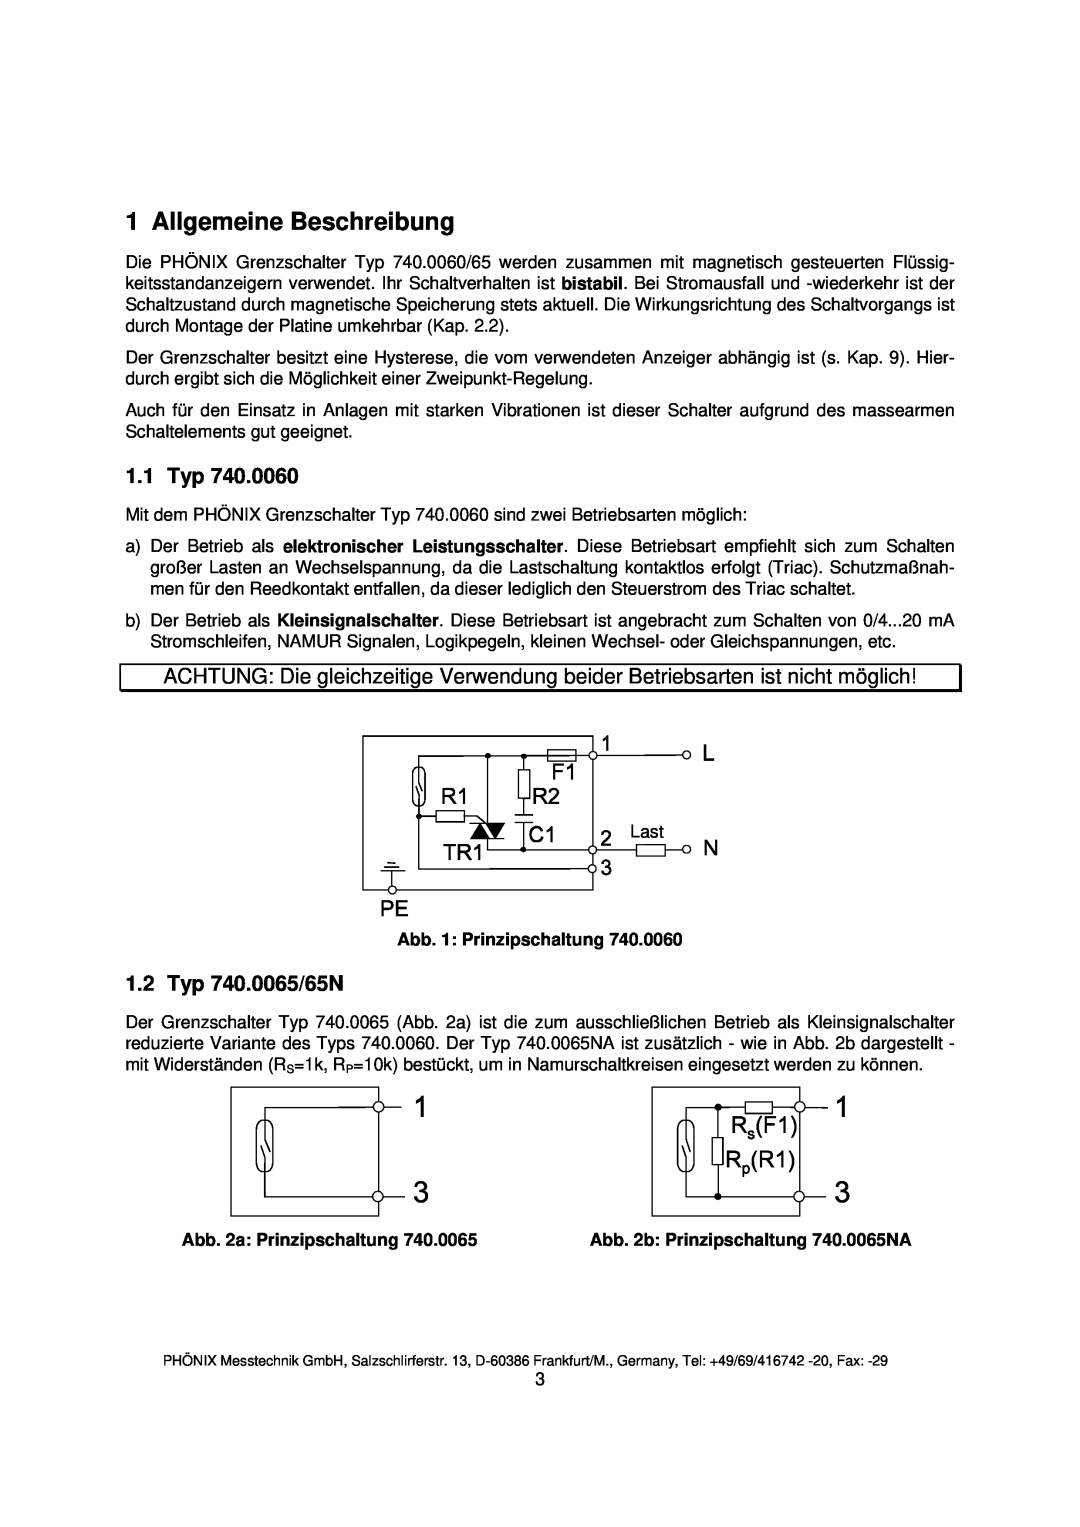 Euphonix Allgemeine Beschreibung, 1.1 Typ, Typ 740.0065/65N, Abb. 1 Prinzipschaltung, Abb. 2a Prinzipschaltung 